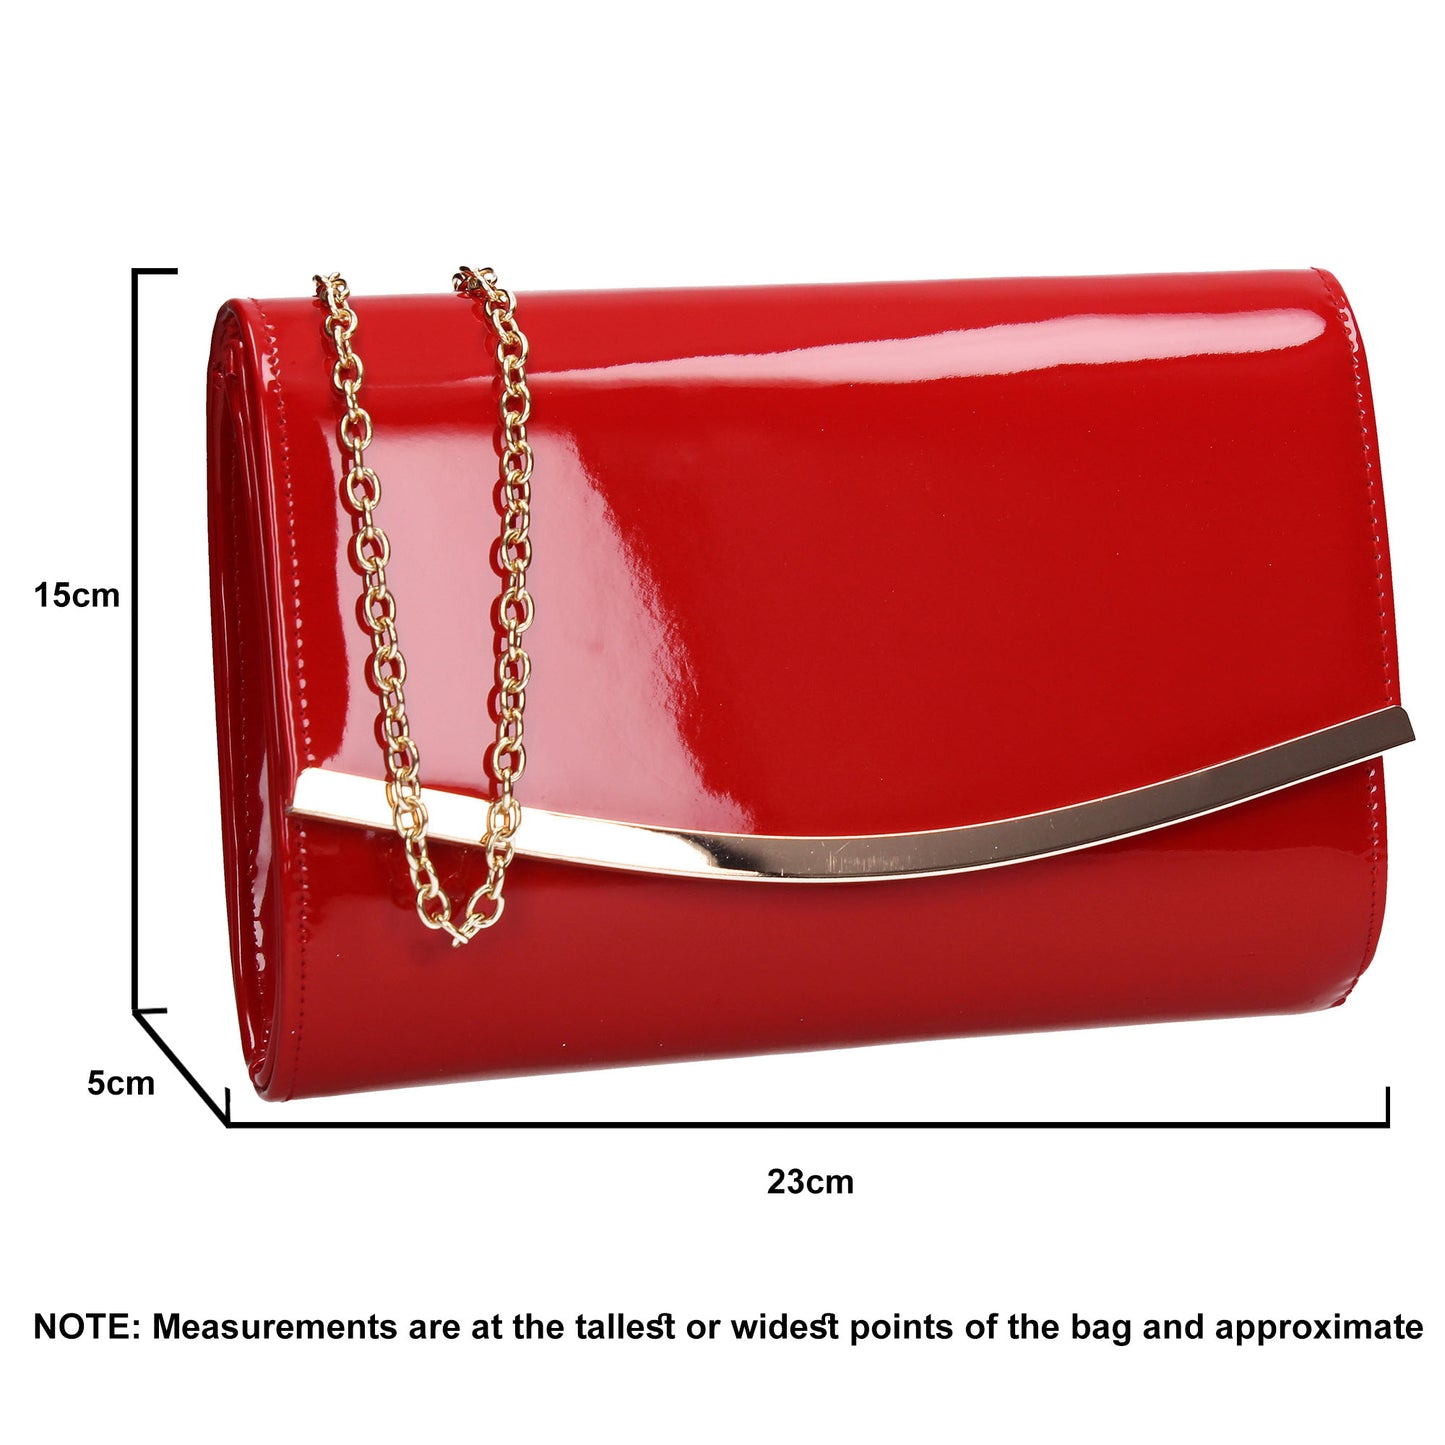 SWANKYSWANS Lilo Clutch Bag Red Cute Cheap Clutch Bag For Weddings School and Work